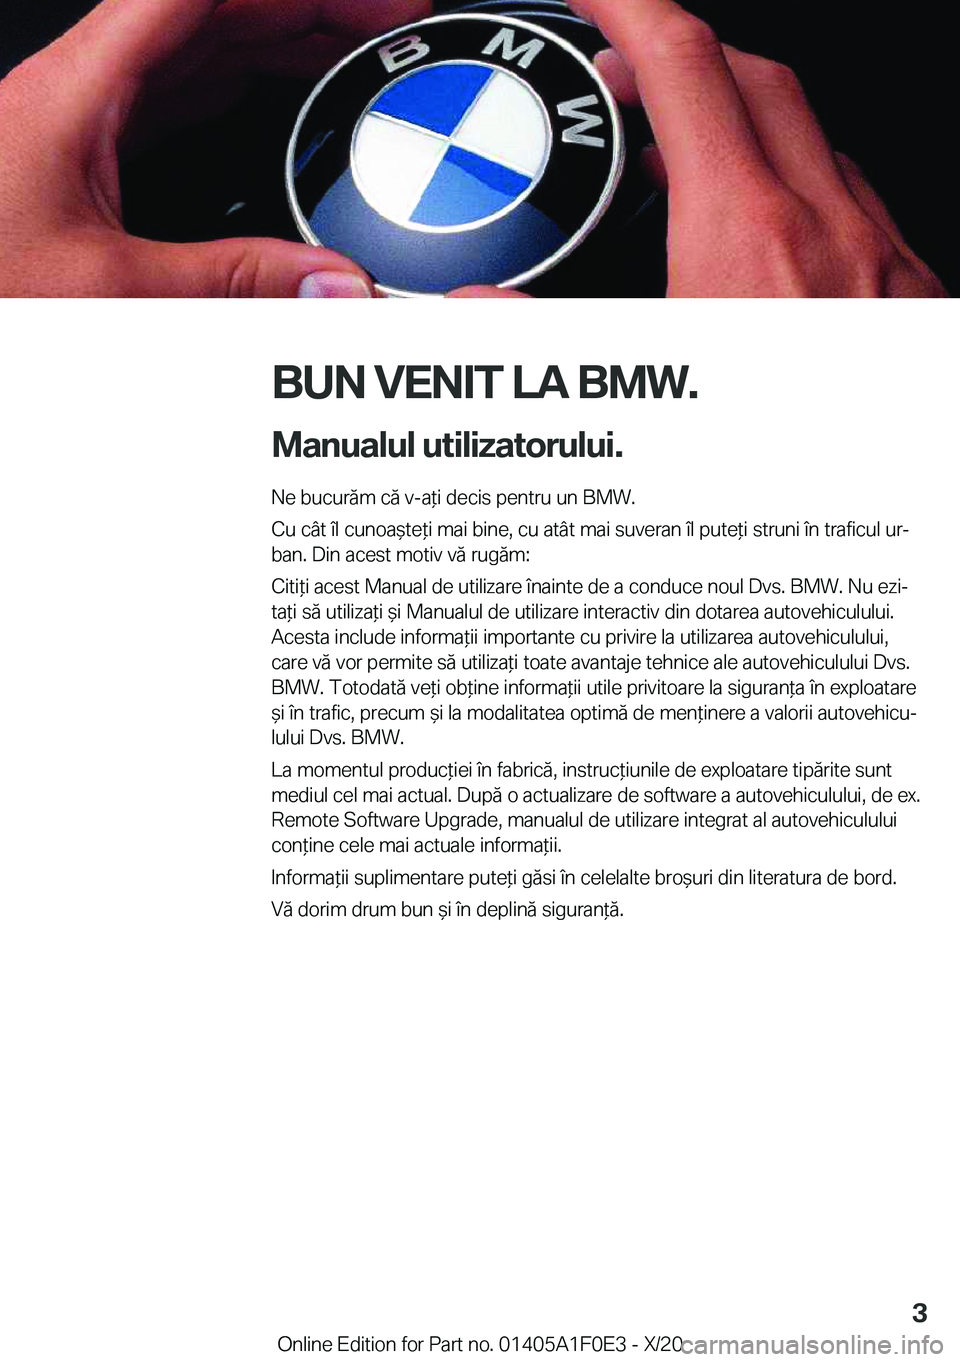 BMW X6 2021  Ghiduri De Utilizare (in Romanian) �B�U�N��V�E�N�I�T��L�A��B�M�W�.�M�a�n�u�a�l�u�l��u�t�i�l�i�z�a�t�o�r�u�l�u�i�.
�N�e��b�u�c�u�r�ă�m��c�ă��v�-�a*�i��d�e�c�i�s��p�e�n�t�r�u��u�n��B�M�W�.
�C�u��c�